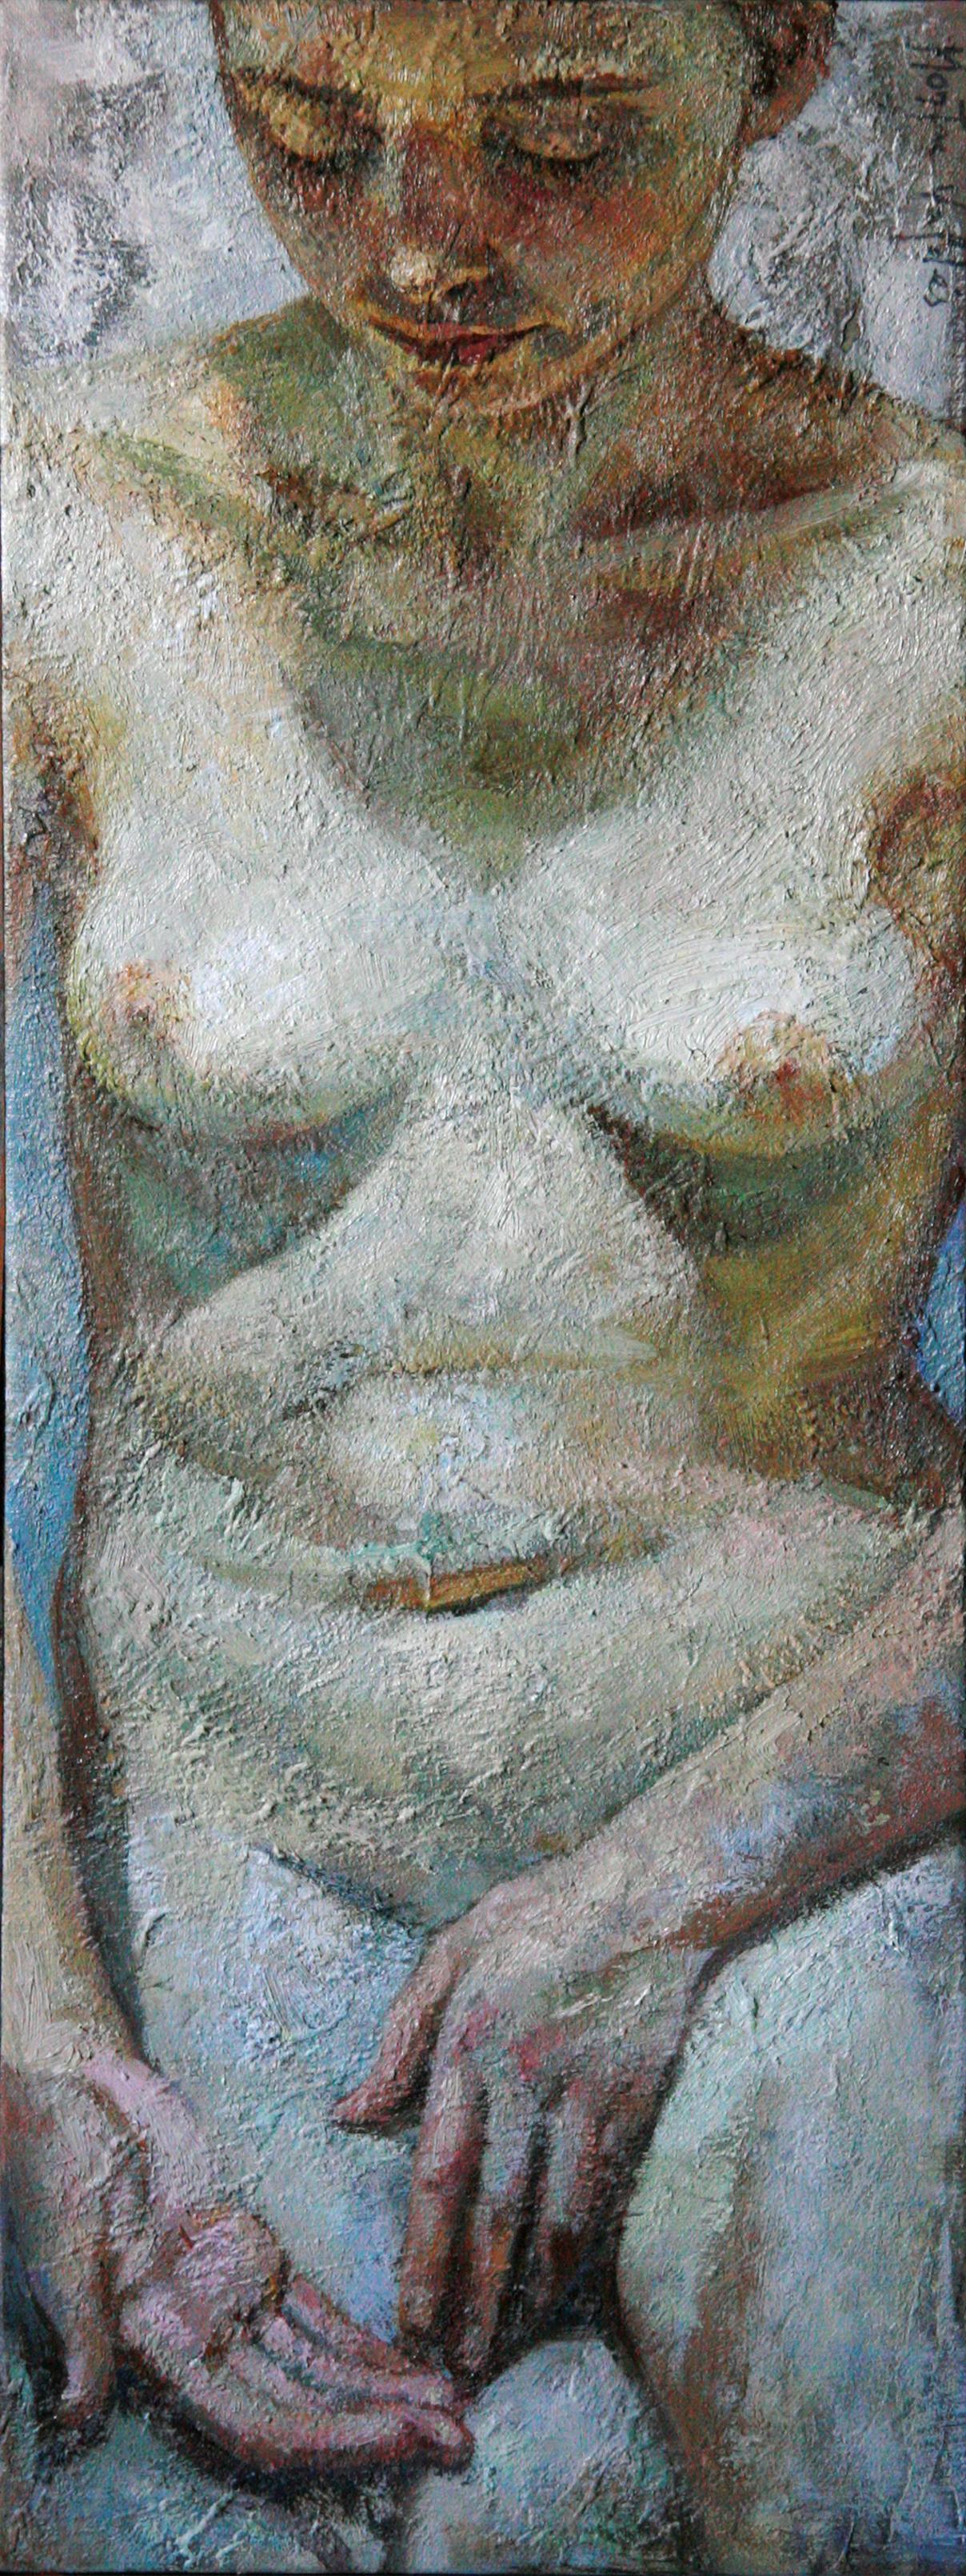 Montse Valdés Portrait Painting - 7-7-11 - 21st Century, Contemporary, Nude Painting, Oil on Canvas